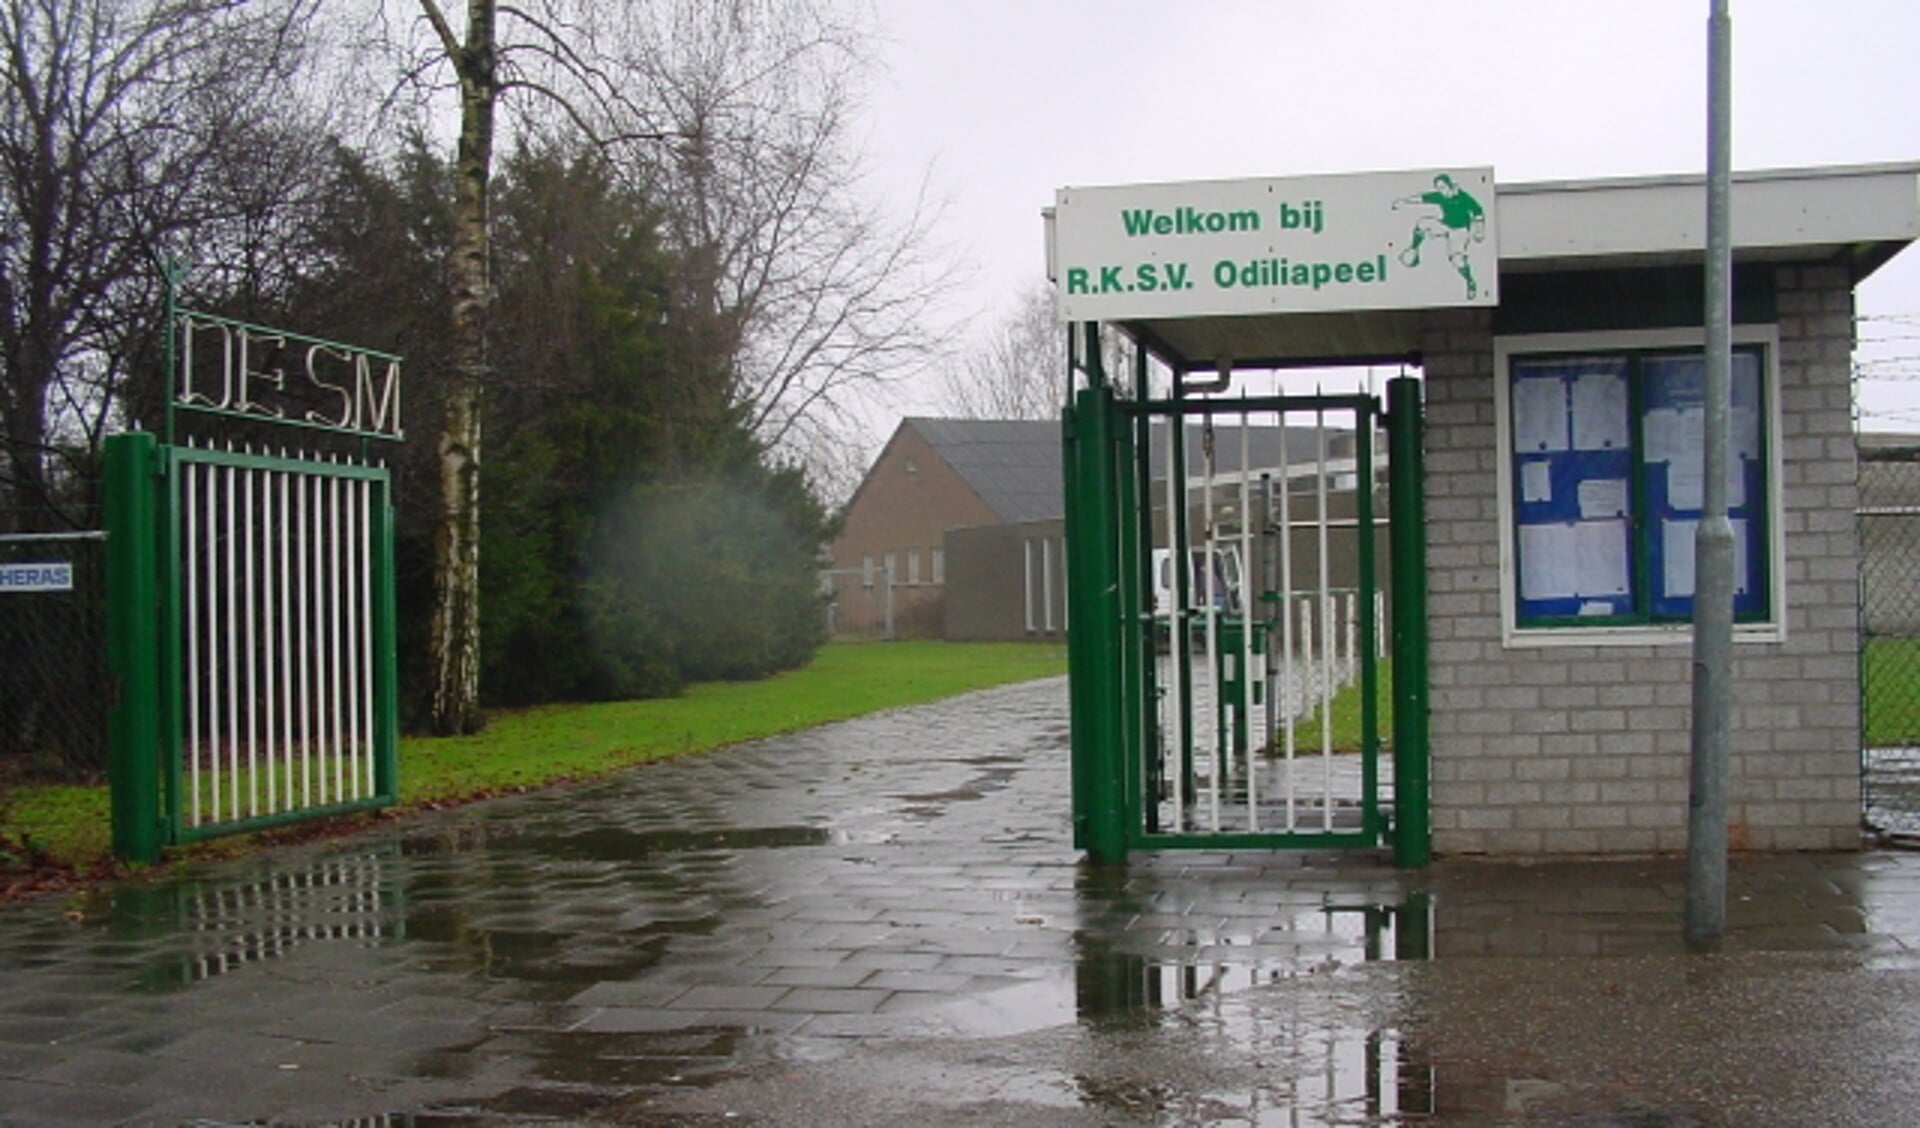 Sportpark De Smelen in Odiliapeel.